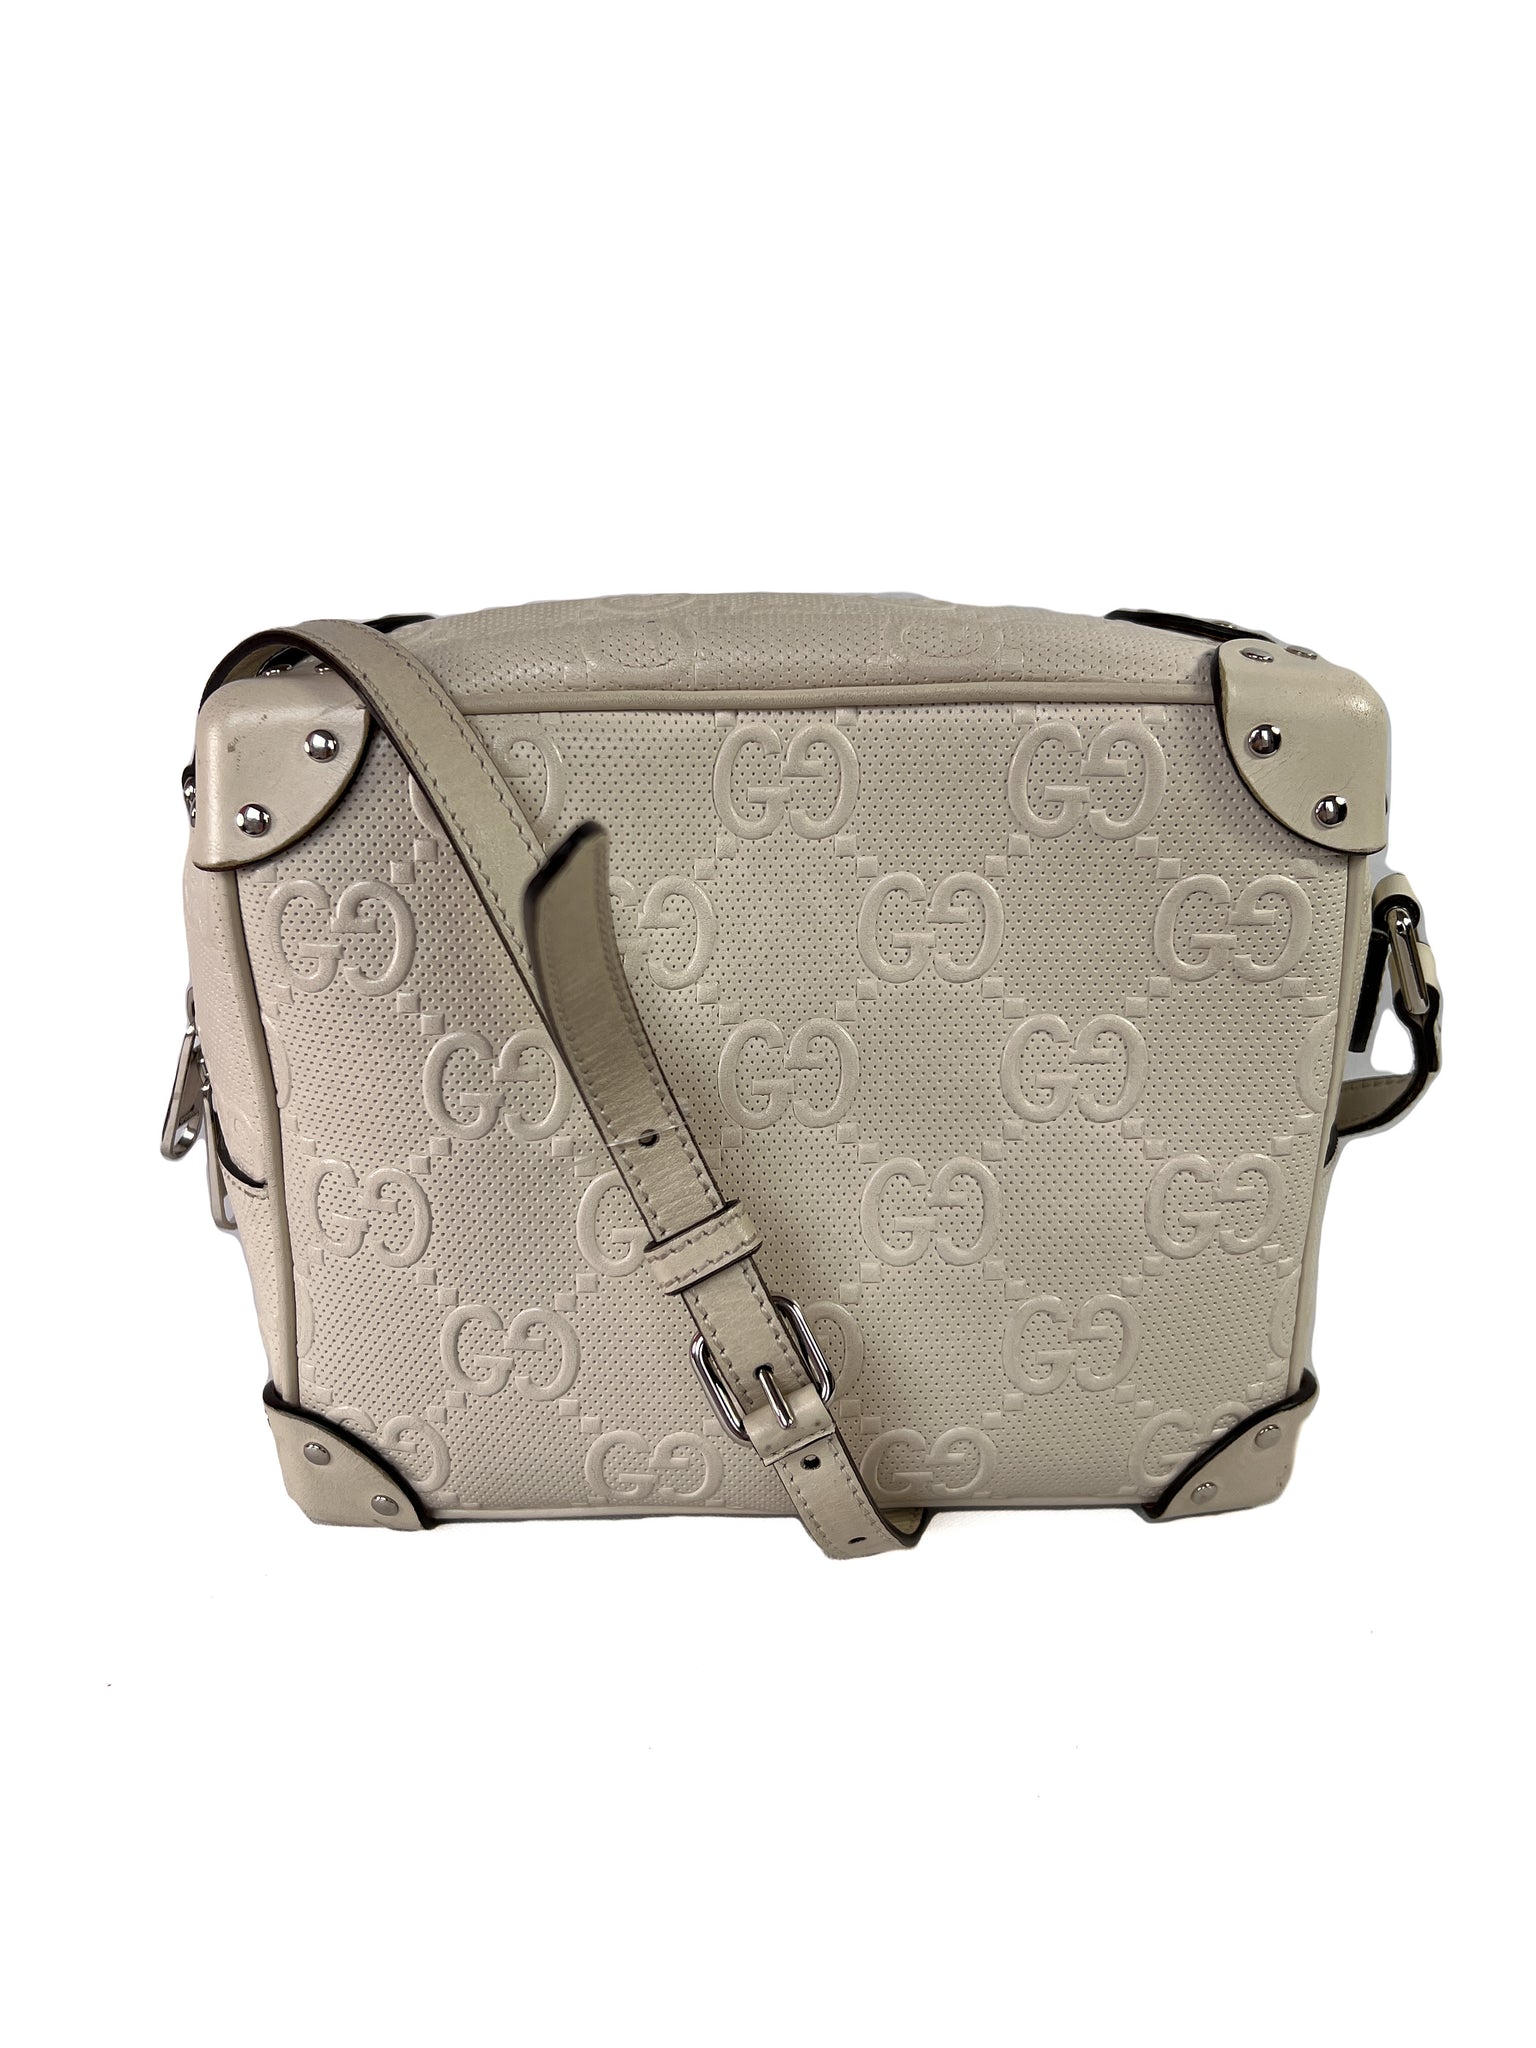 Fish Leather Bag | Messenger Bag | Handbag | Shoulder Bags - New Women's  Retro Handbag - Aliexpress